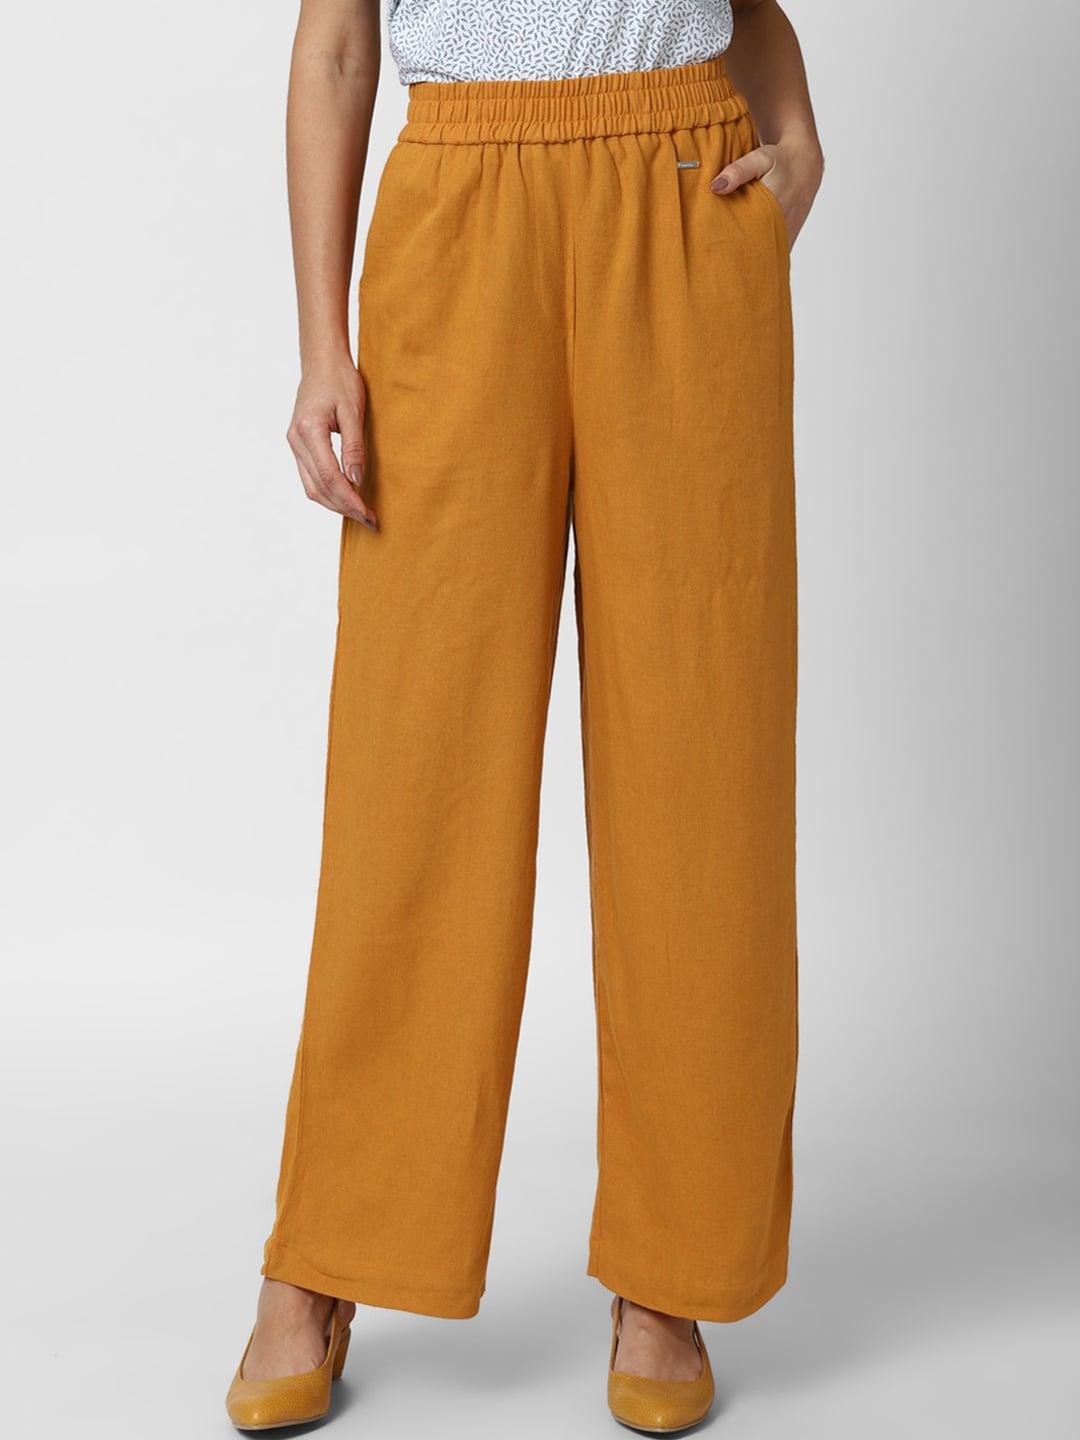 Van Heusen Woman Yellow Solid Trousers